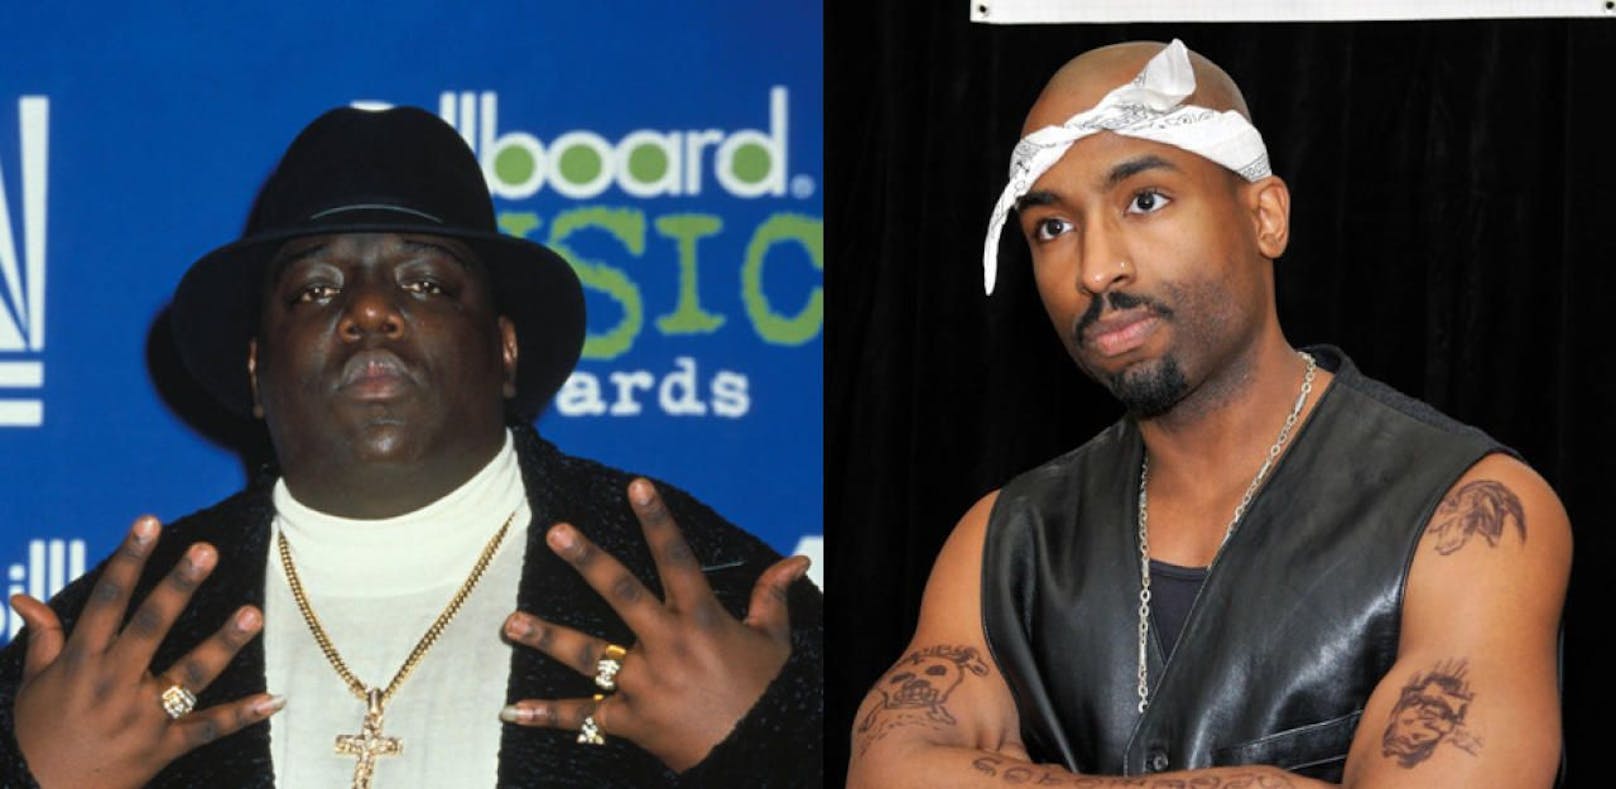 Serie über Tupac und The Notorious B.I.G. kommt